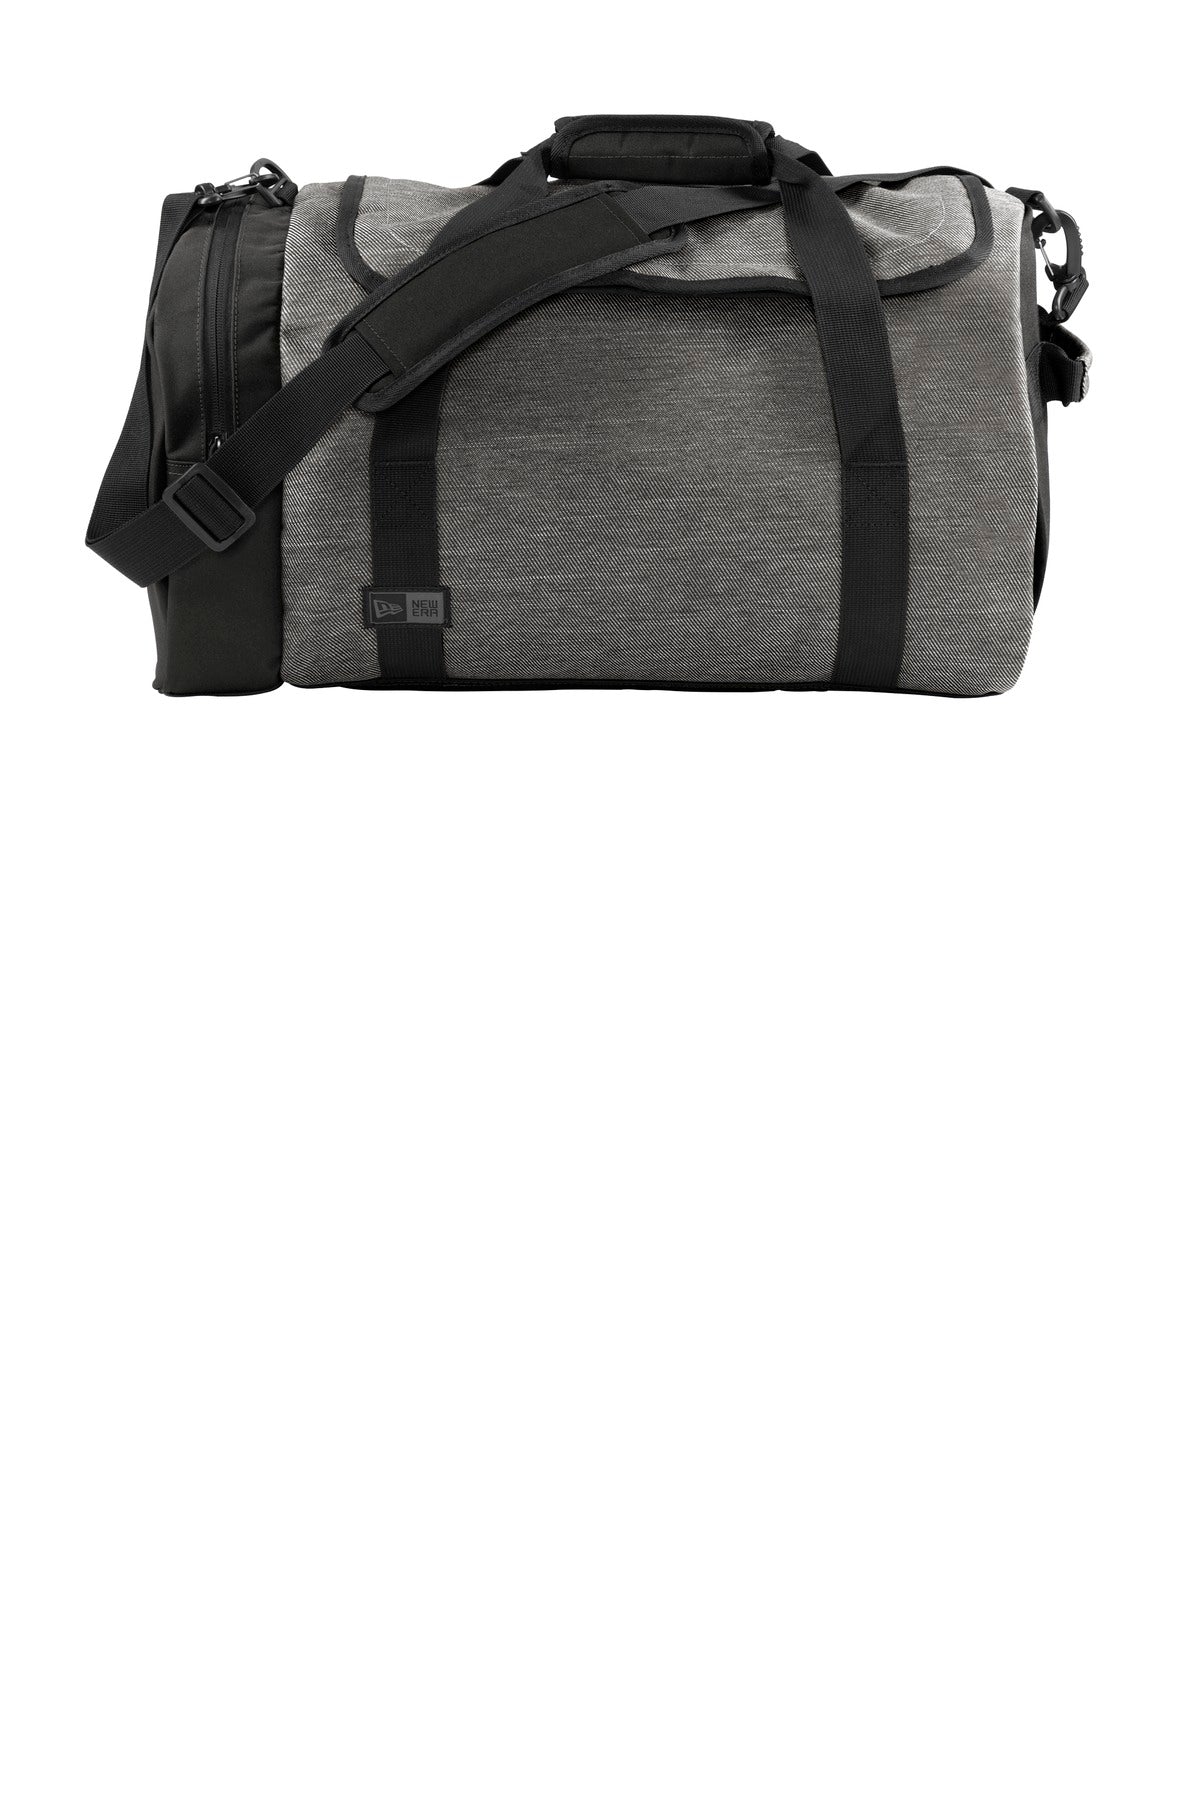 Photo of New Era Bags NEB800  color  Black Twill Heather/ Black